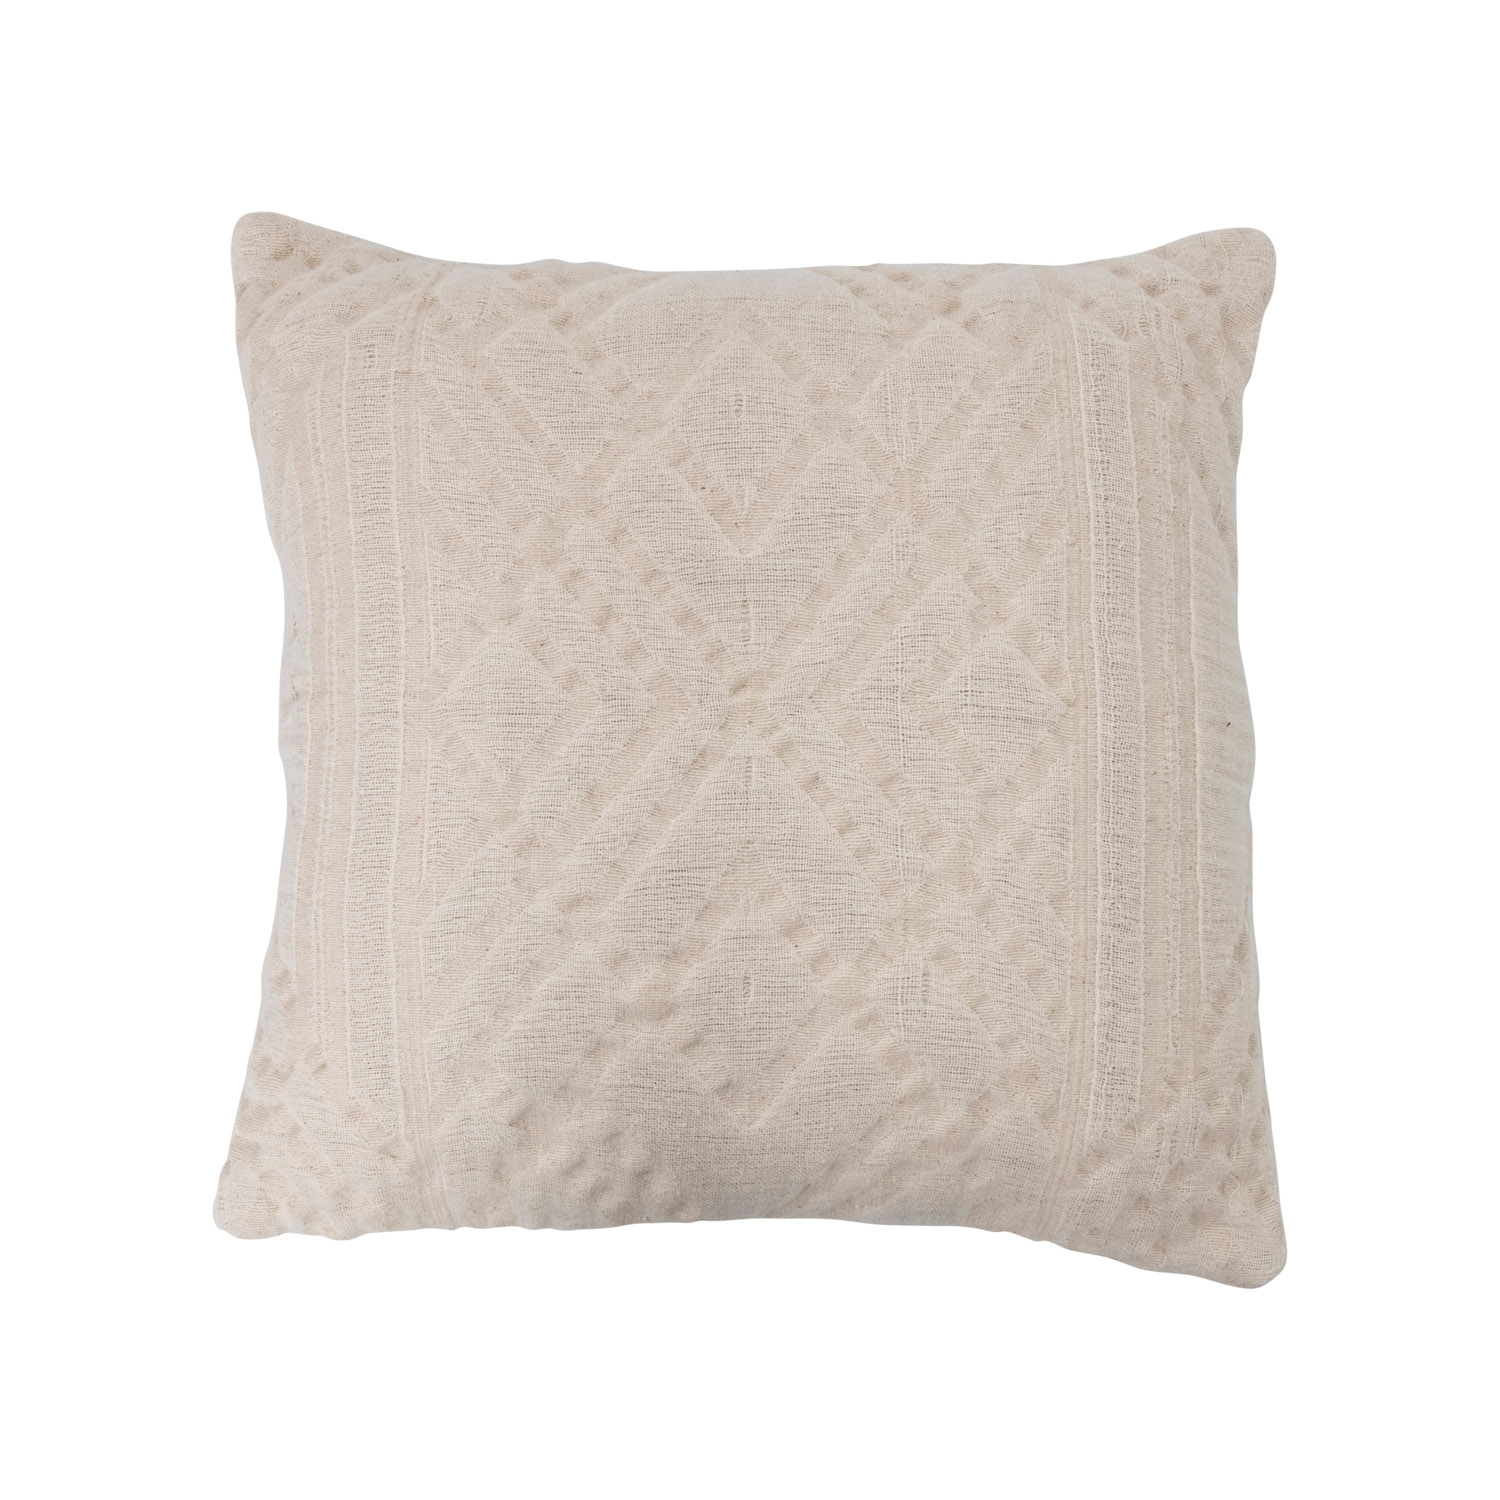 Woven Cotton Jacquard Pillow - Image 0